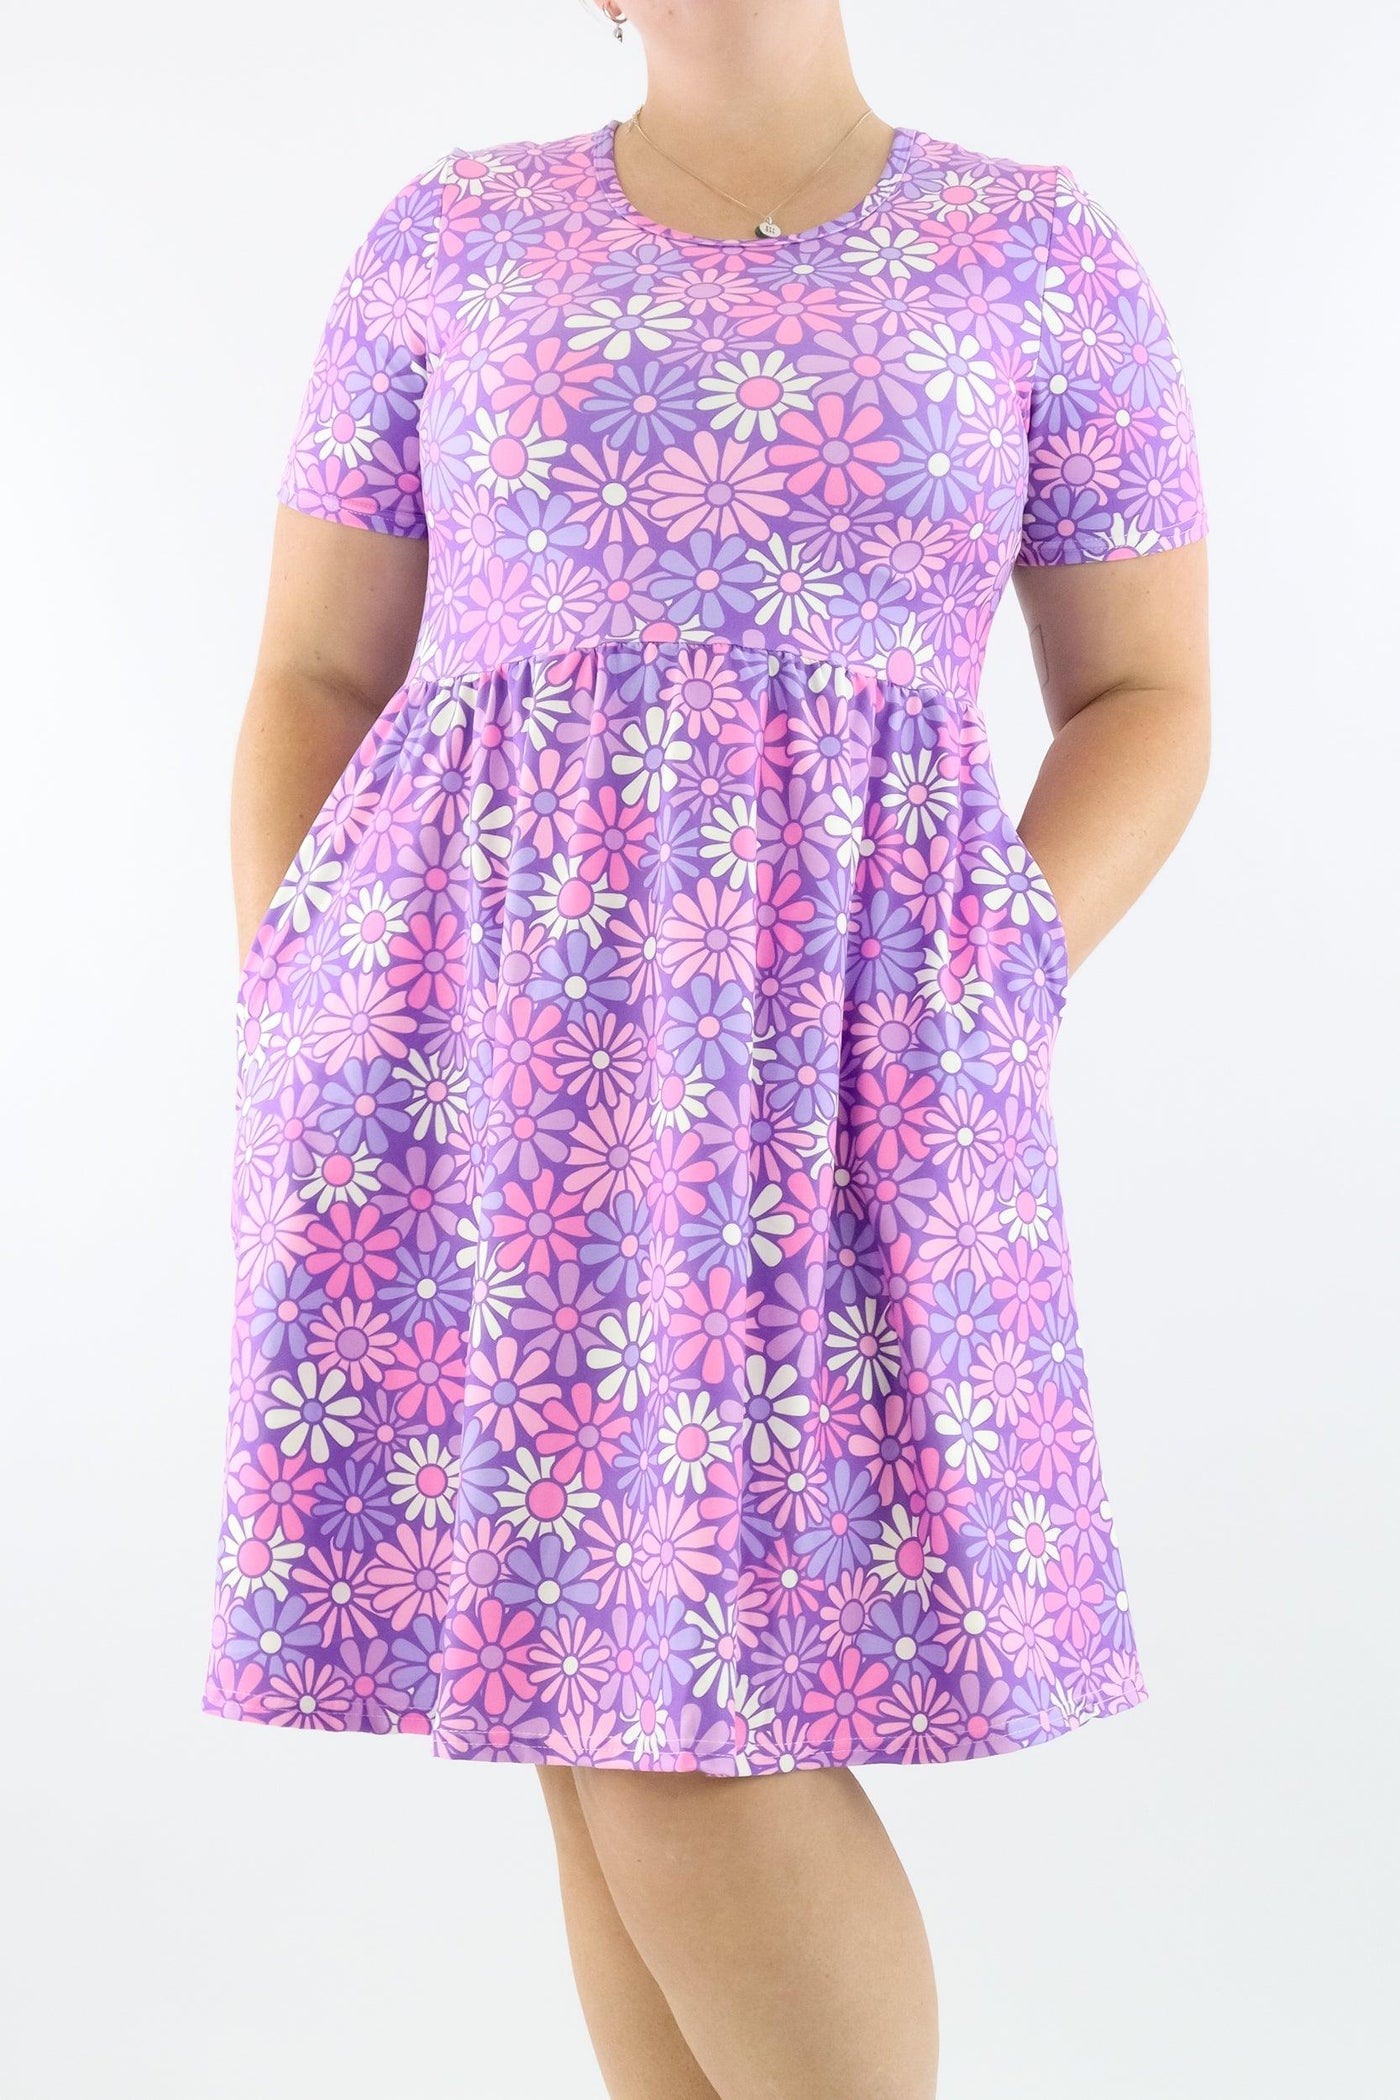 Lilac Daisies - Short Sleeve Skater Dress - Knee Length - Side Pockets